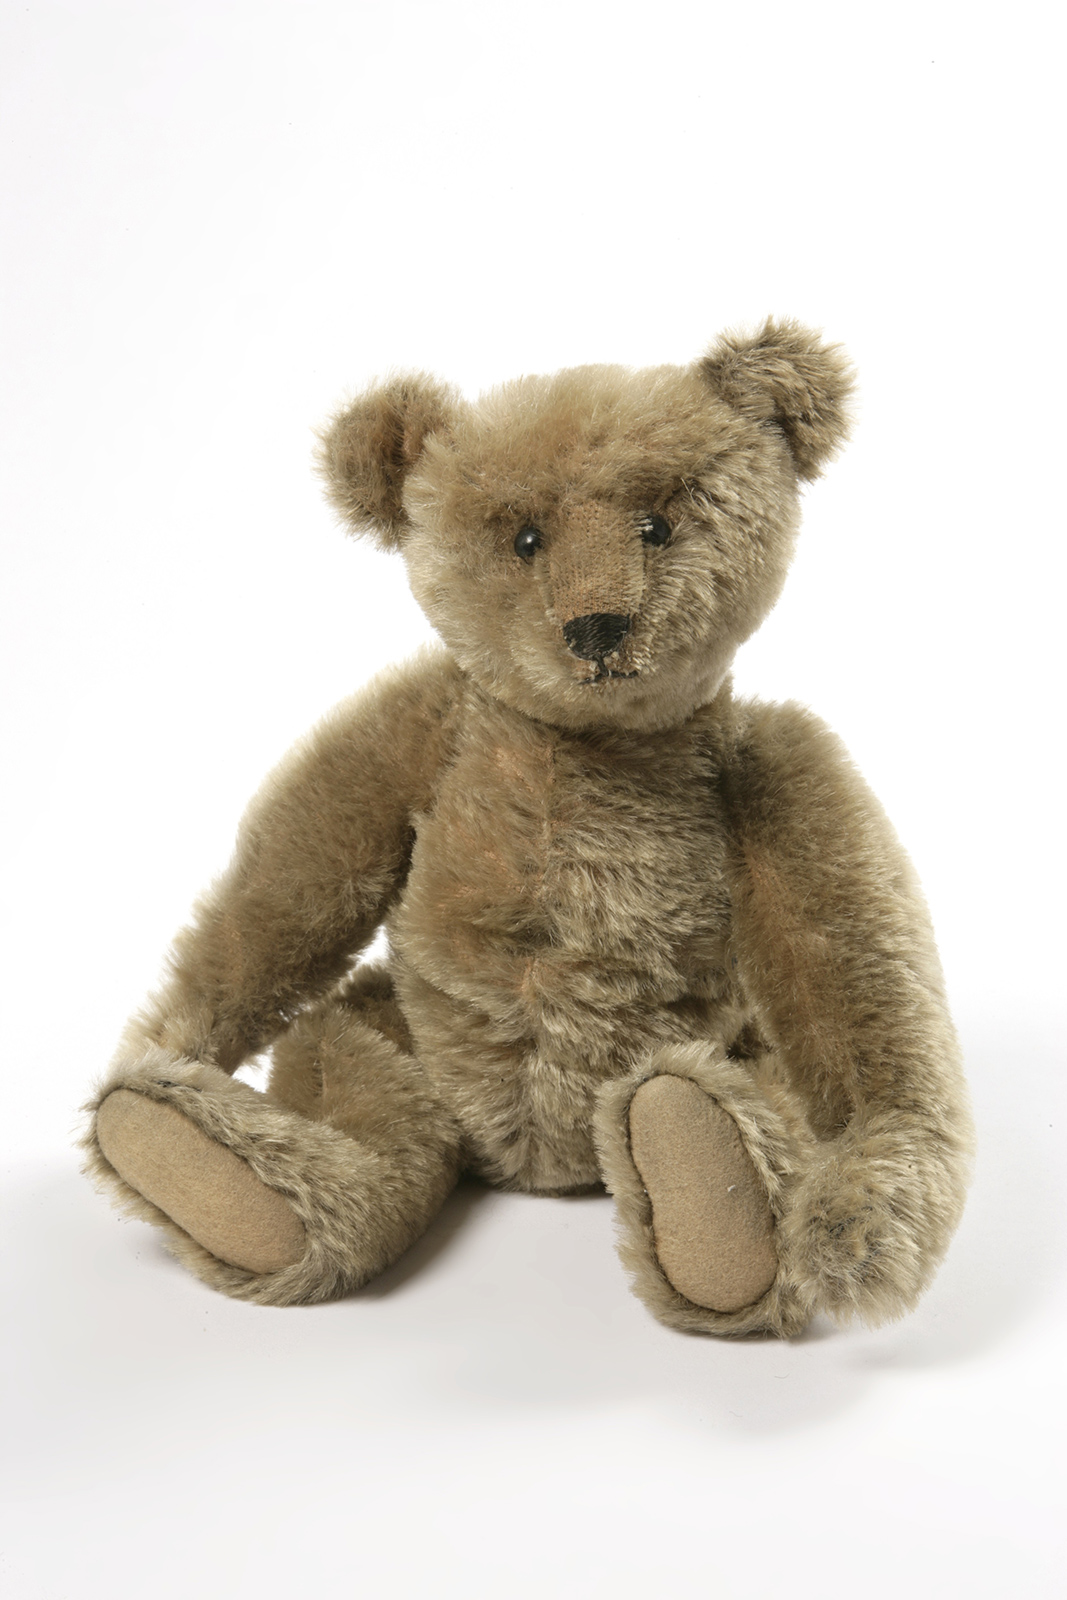 Early teddy bear named after Winnie